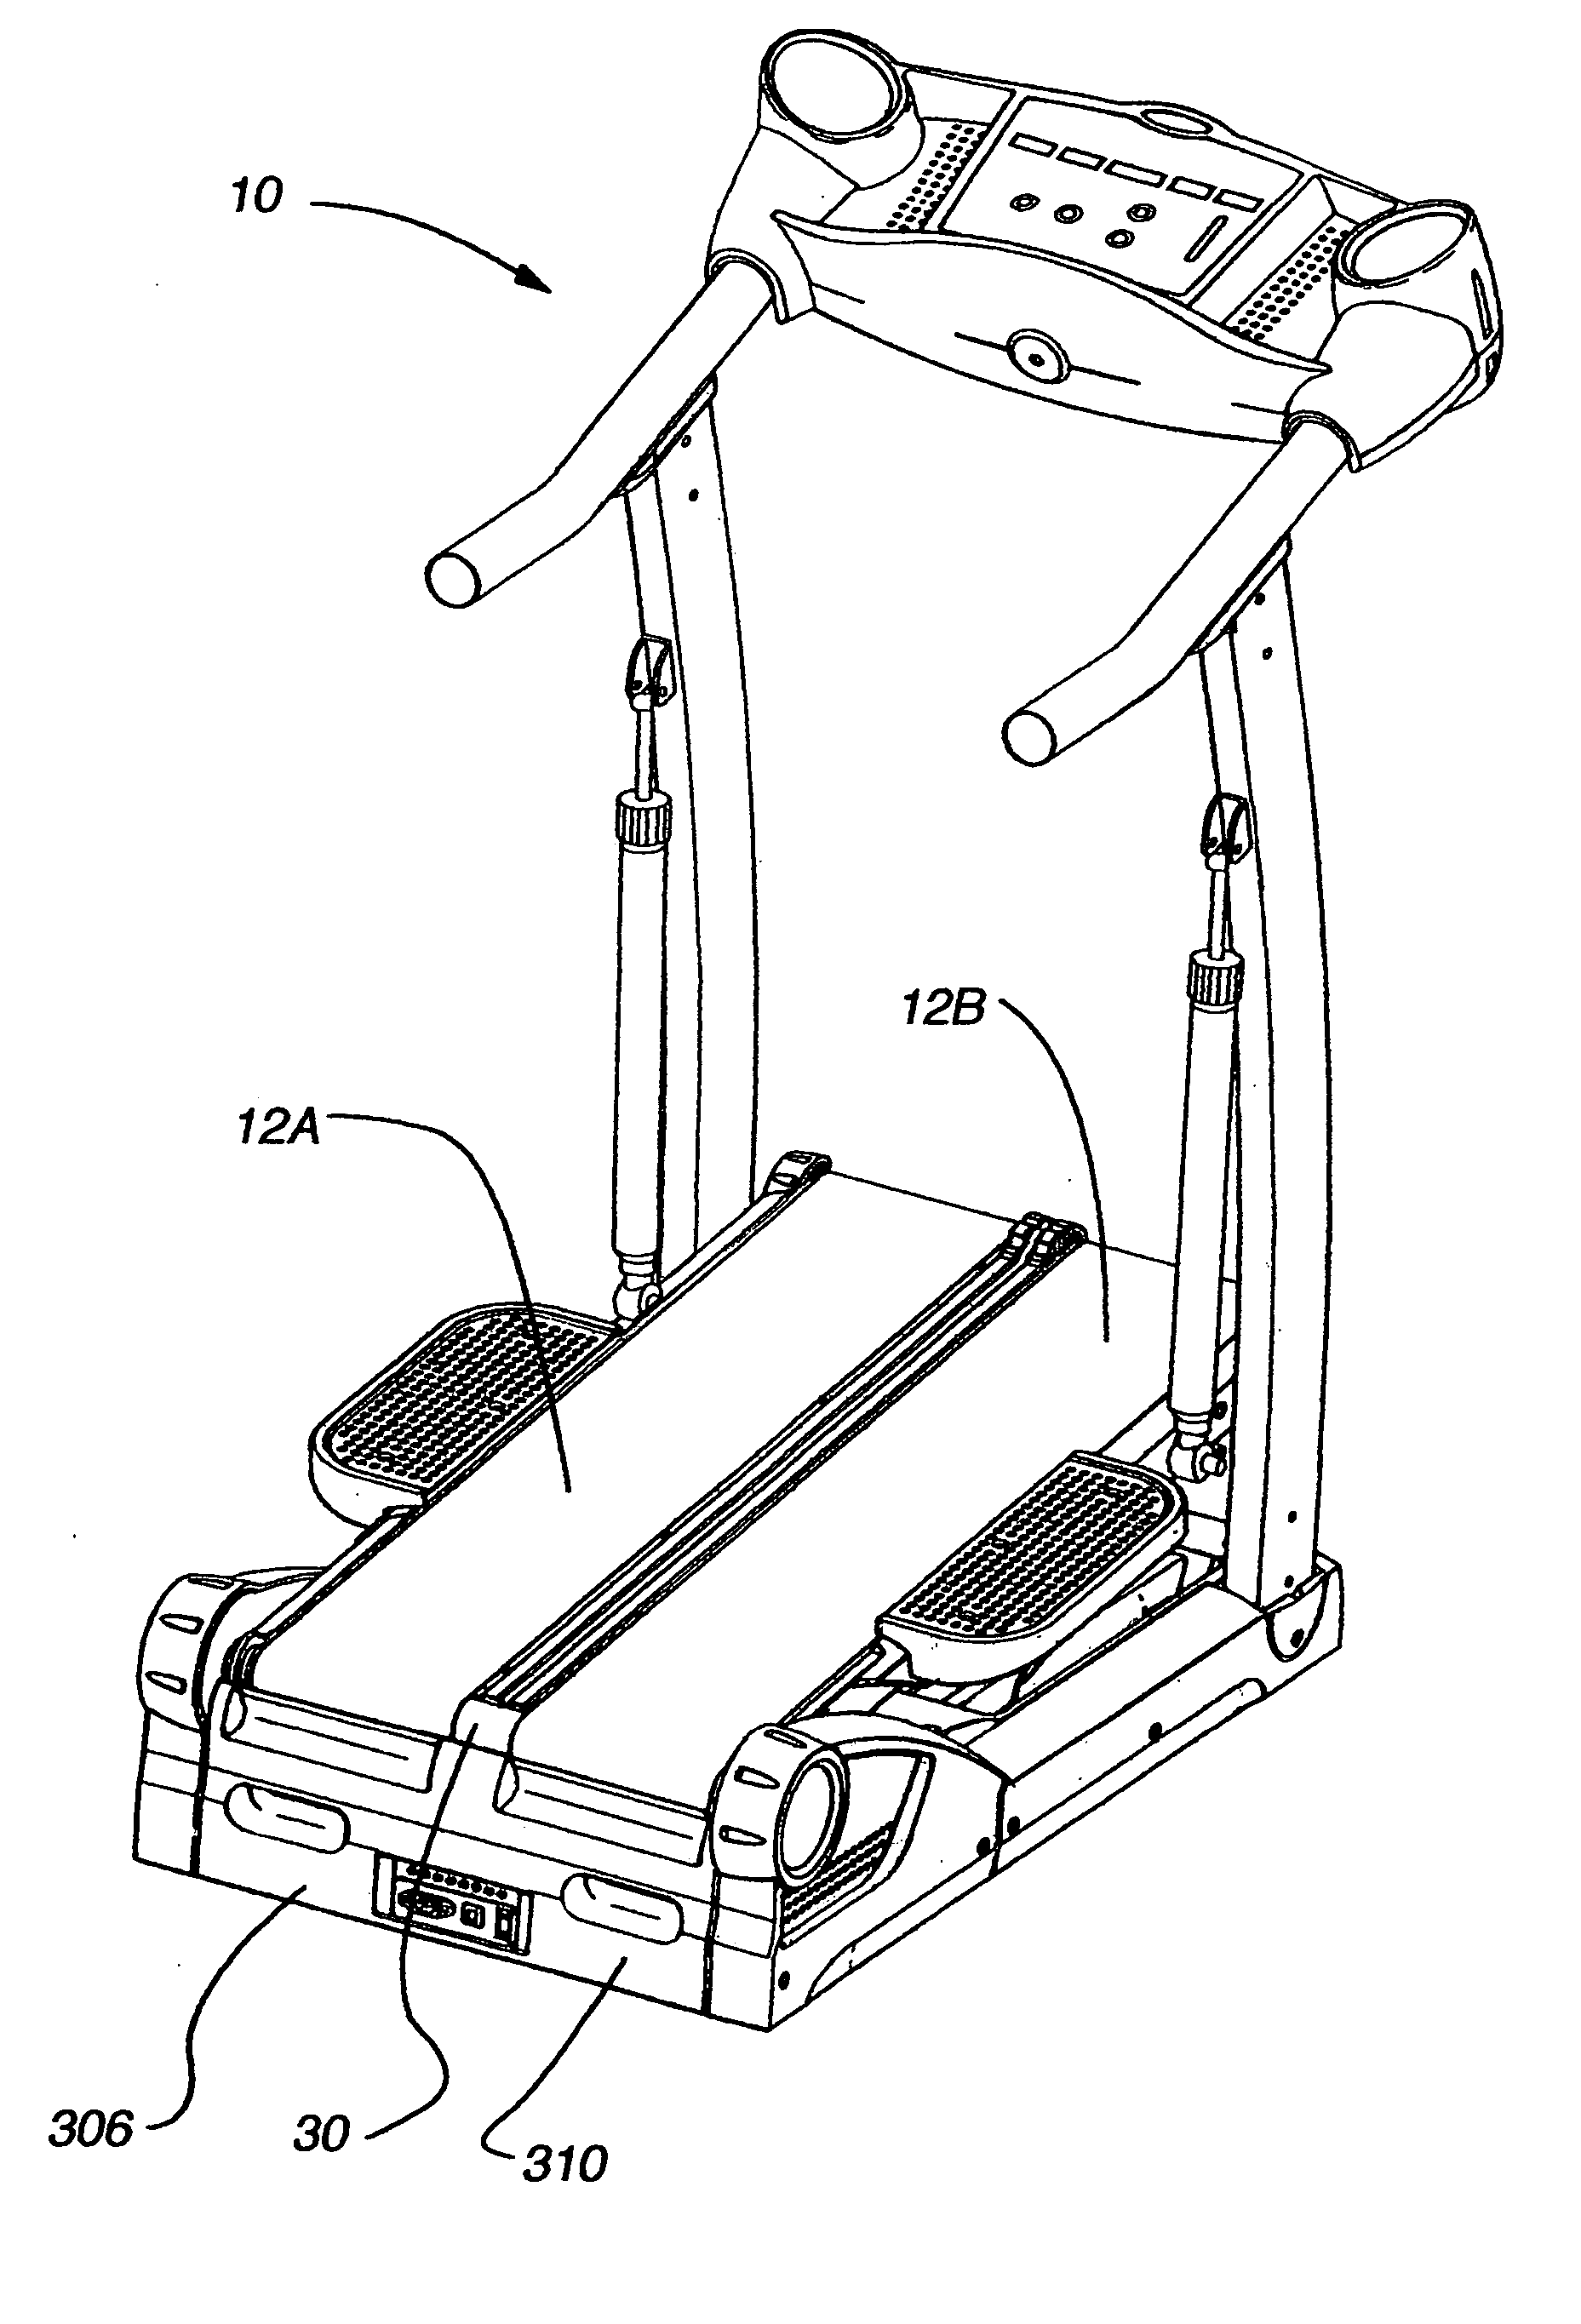 Dual treadmill exercise device having a single rear roller